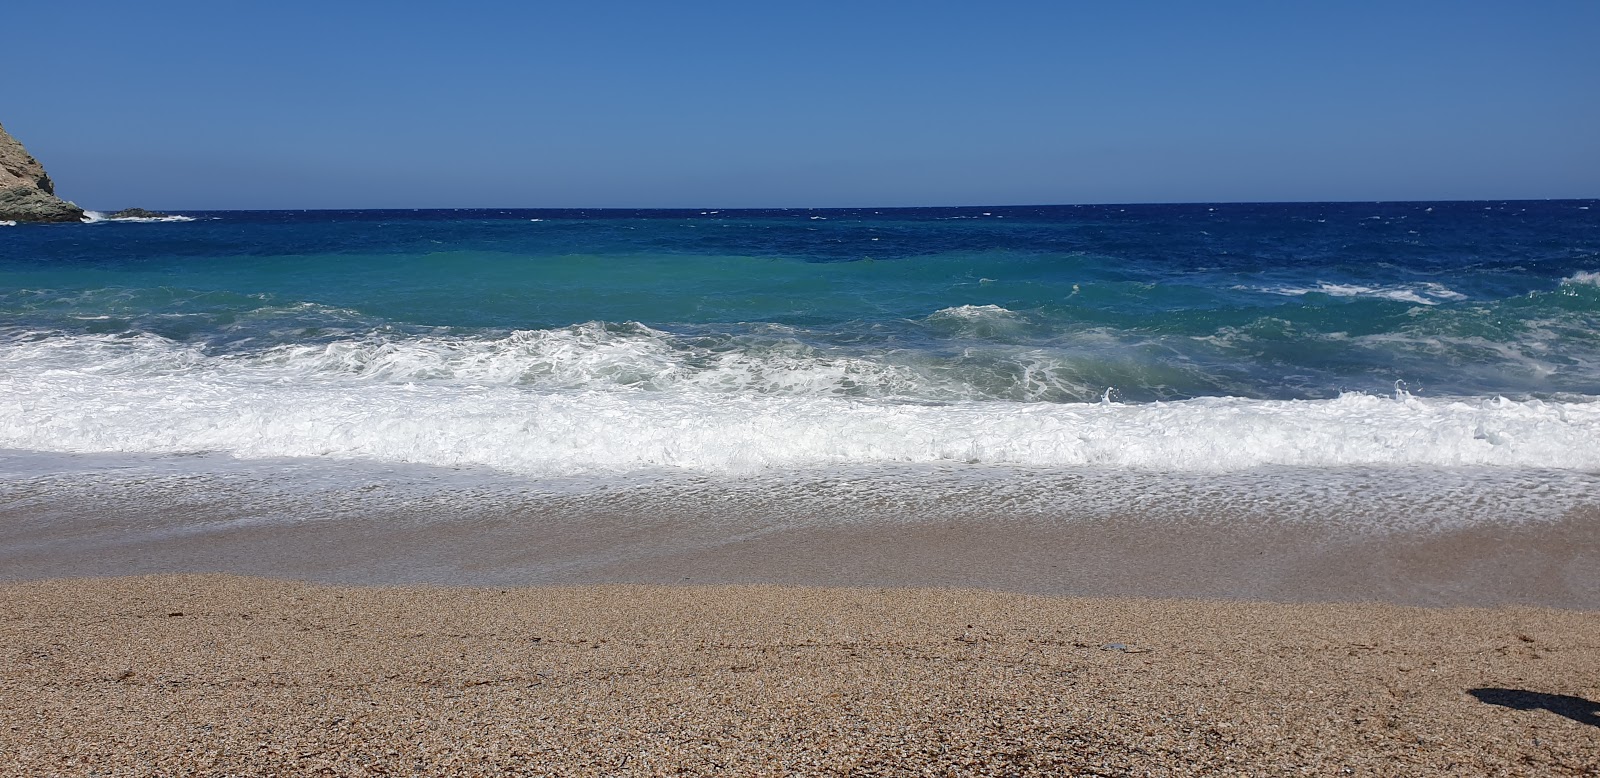 Fotografie cu Giannitsi beach - locul popular printre cunoscătorii de relaxare